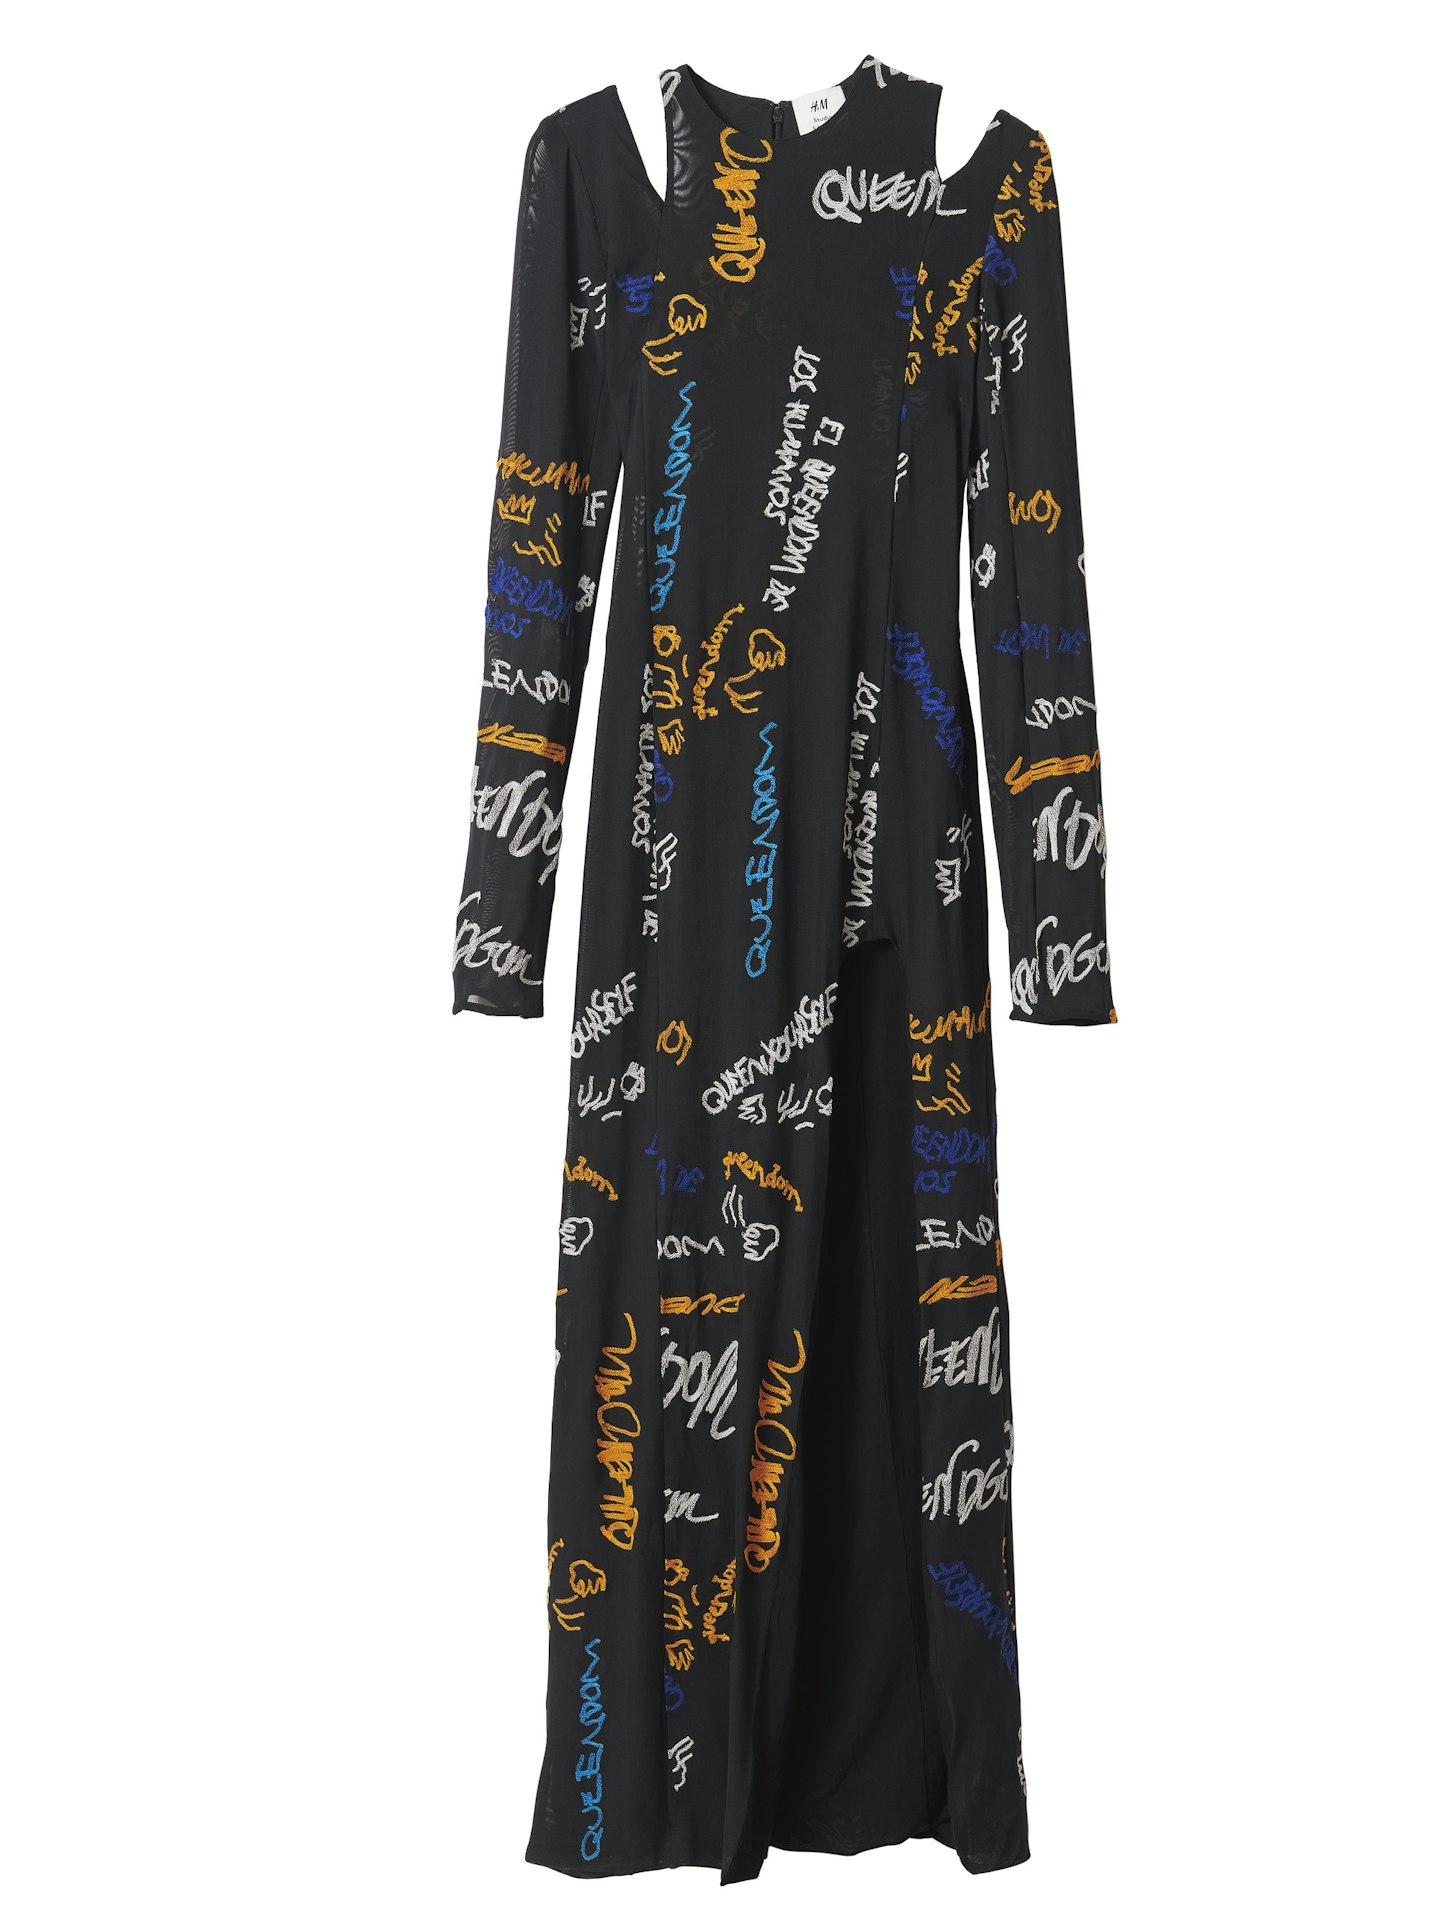 Long Mesh Dress, £59.99